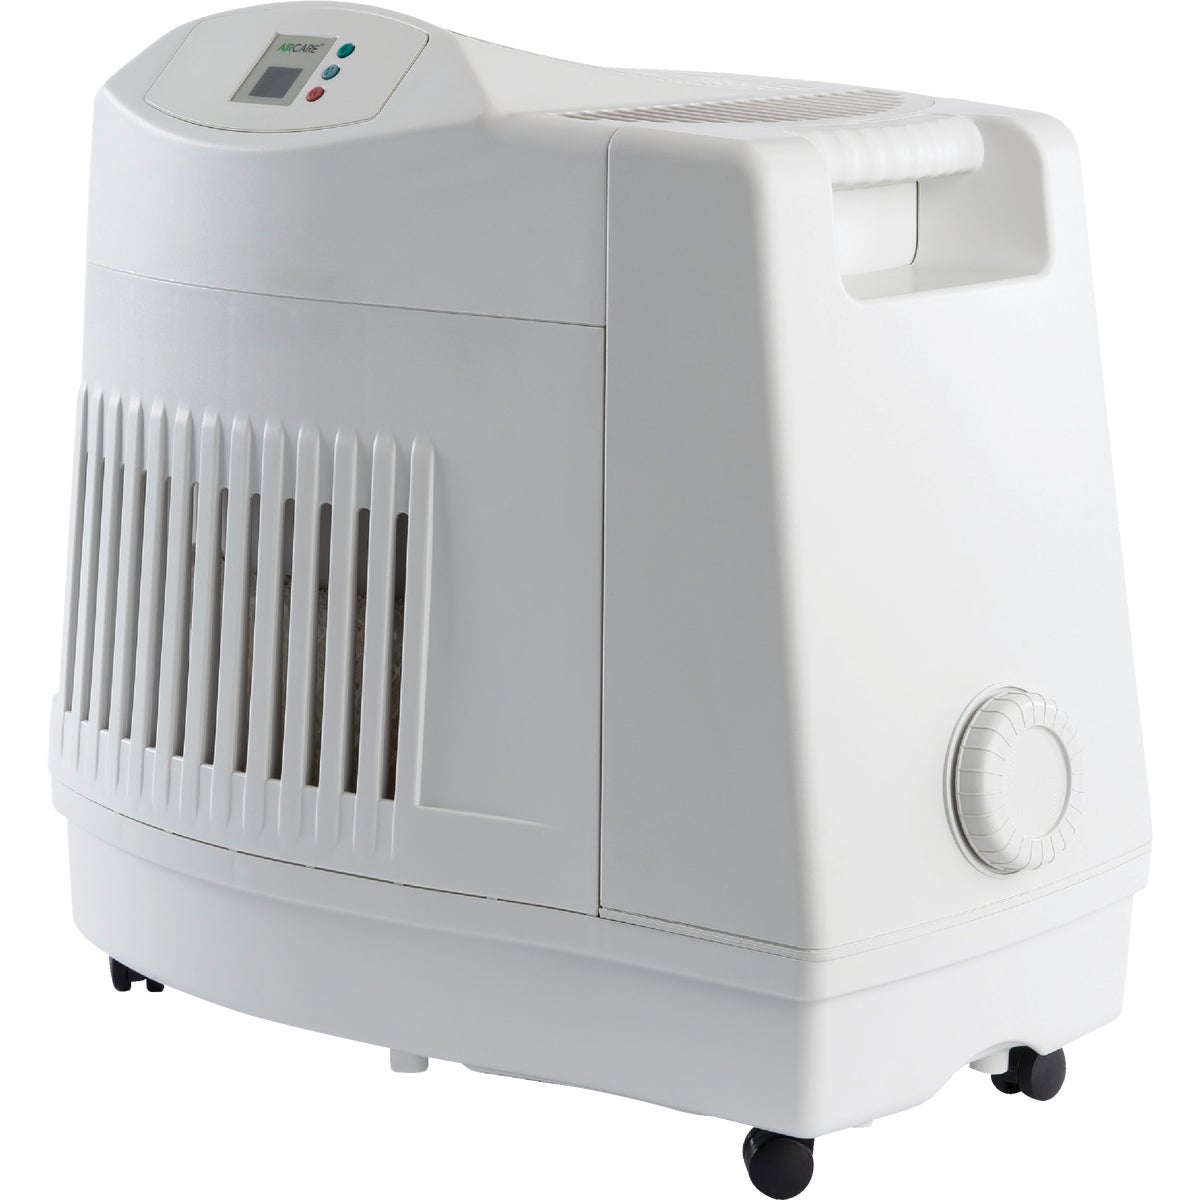 Item 502826, Console evaporative humidifier.